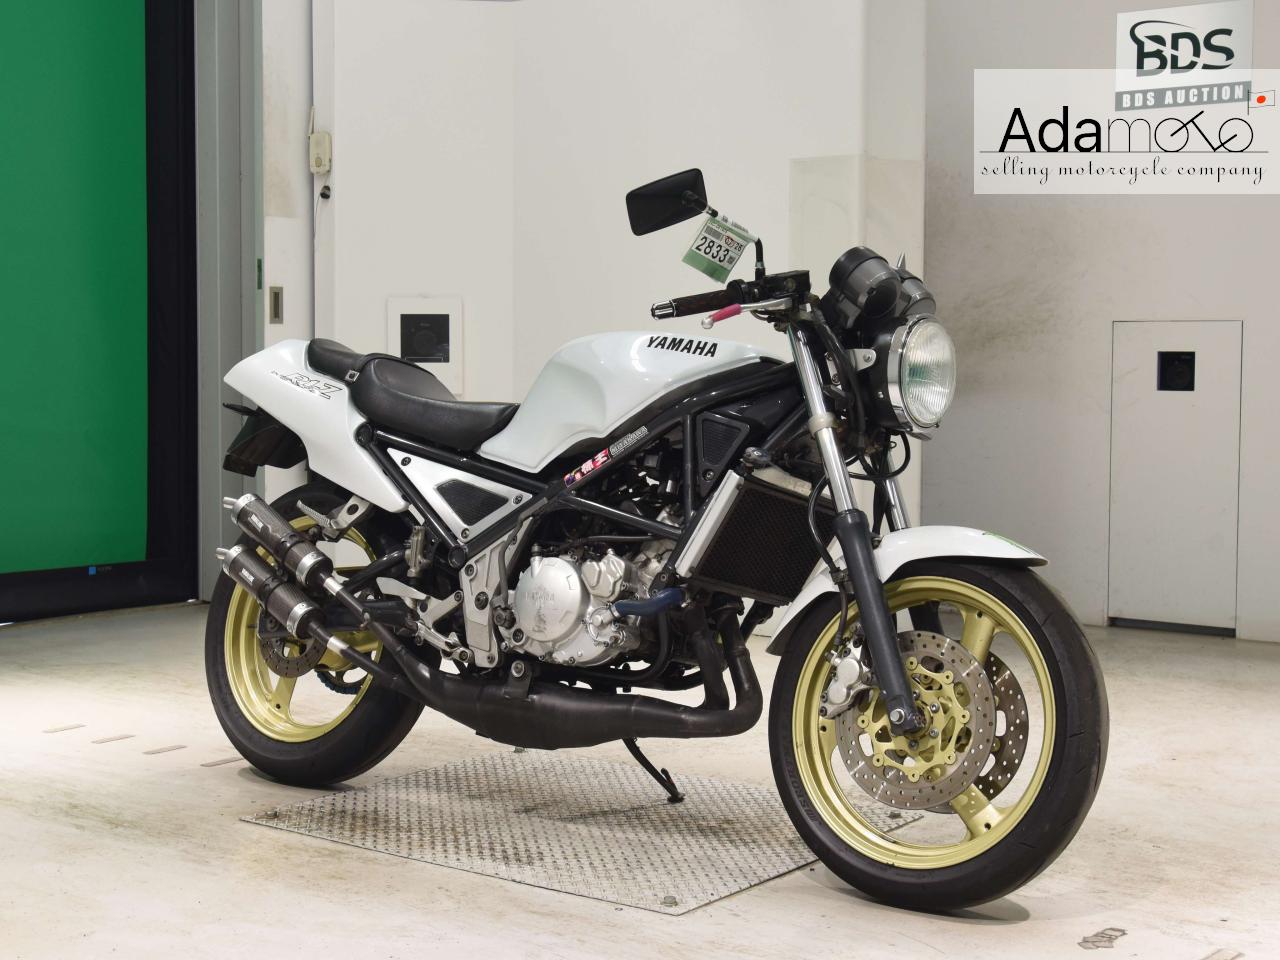 Yamaha R1 Z - Adamoto - Motorcycles from Japan